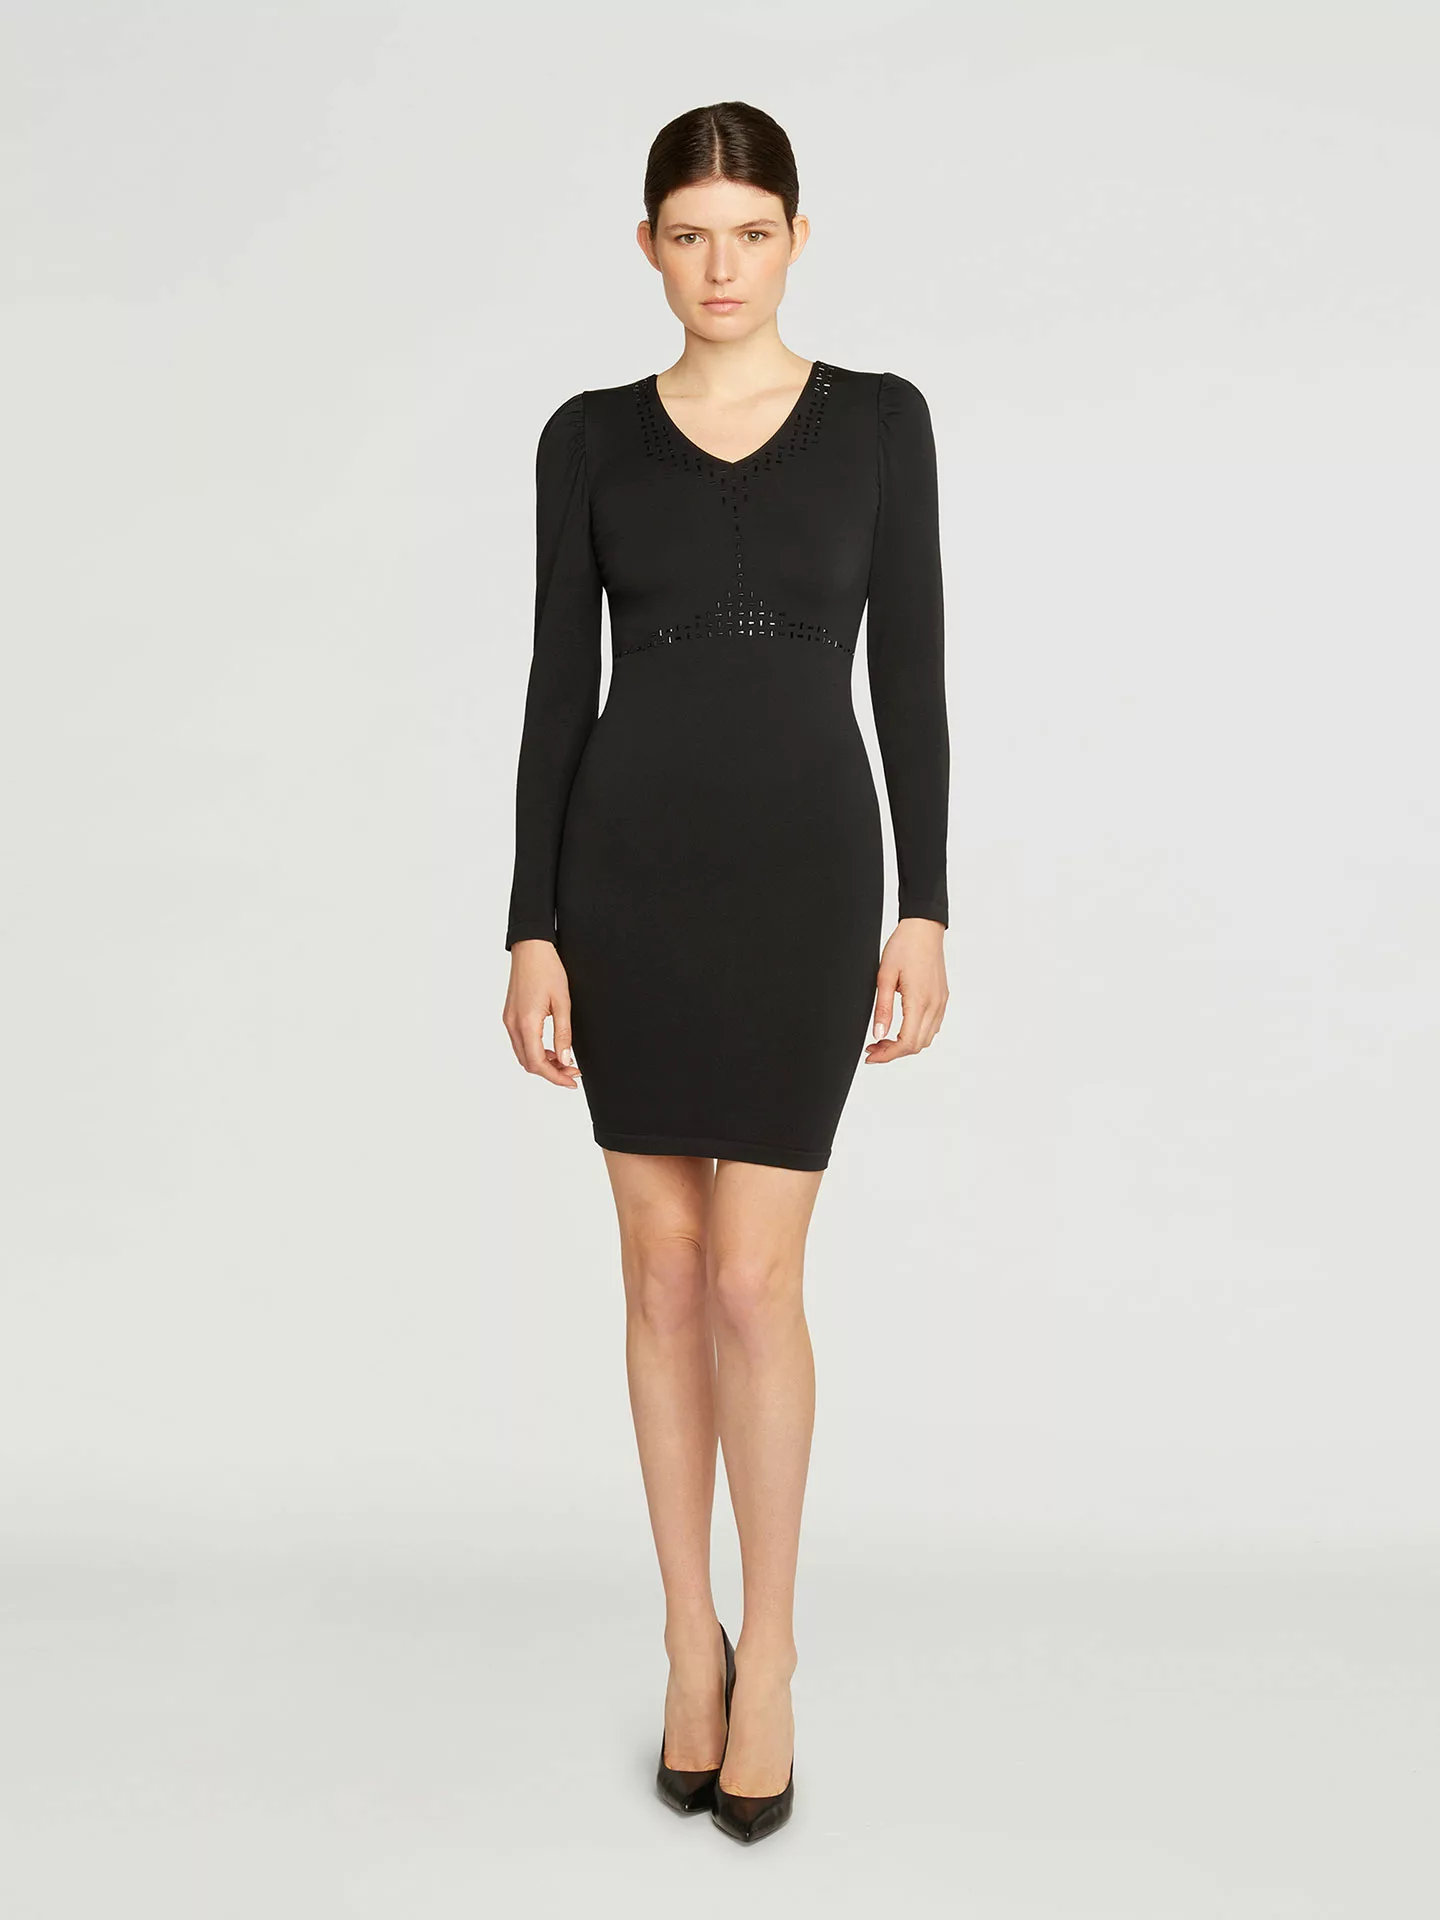 Wolford - Gilda Dress, Frau, black/black, Größe: M günstig online kaufen